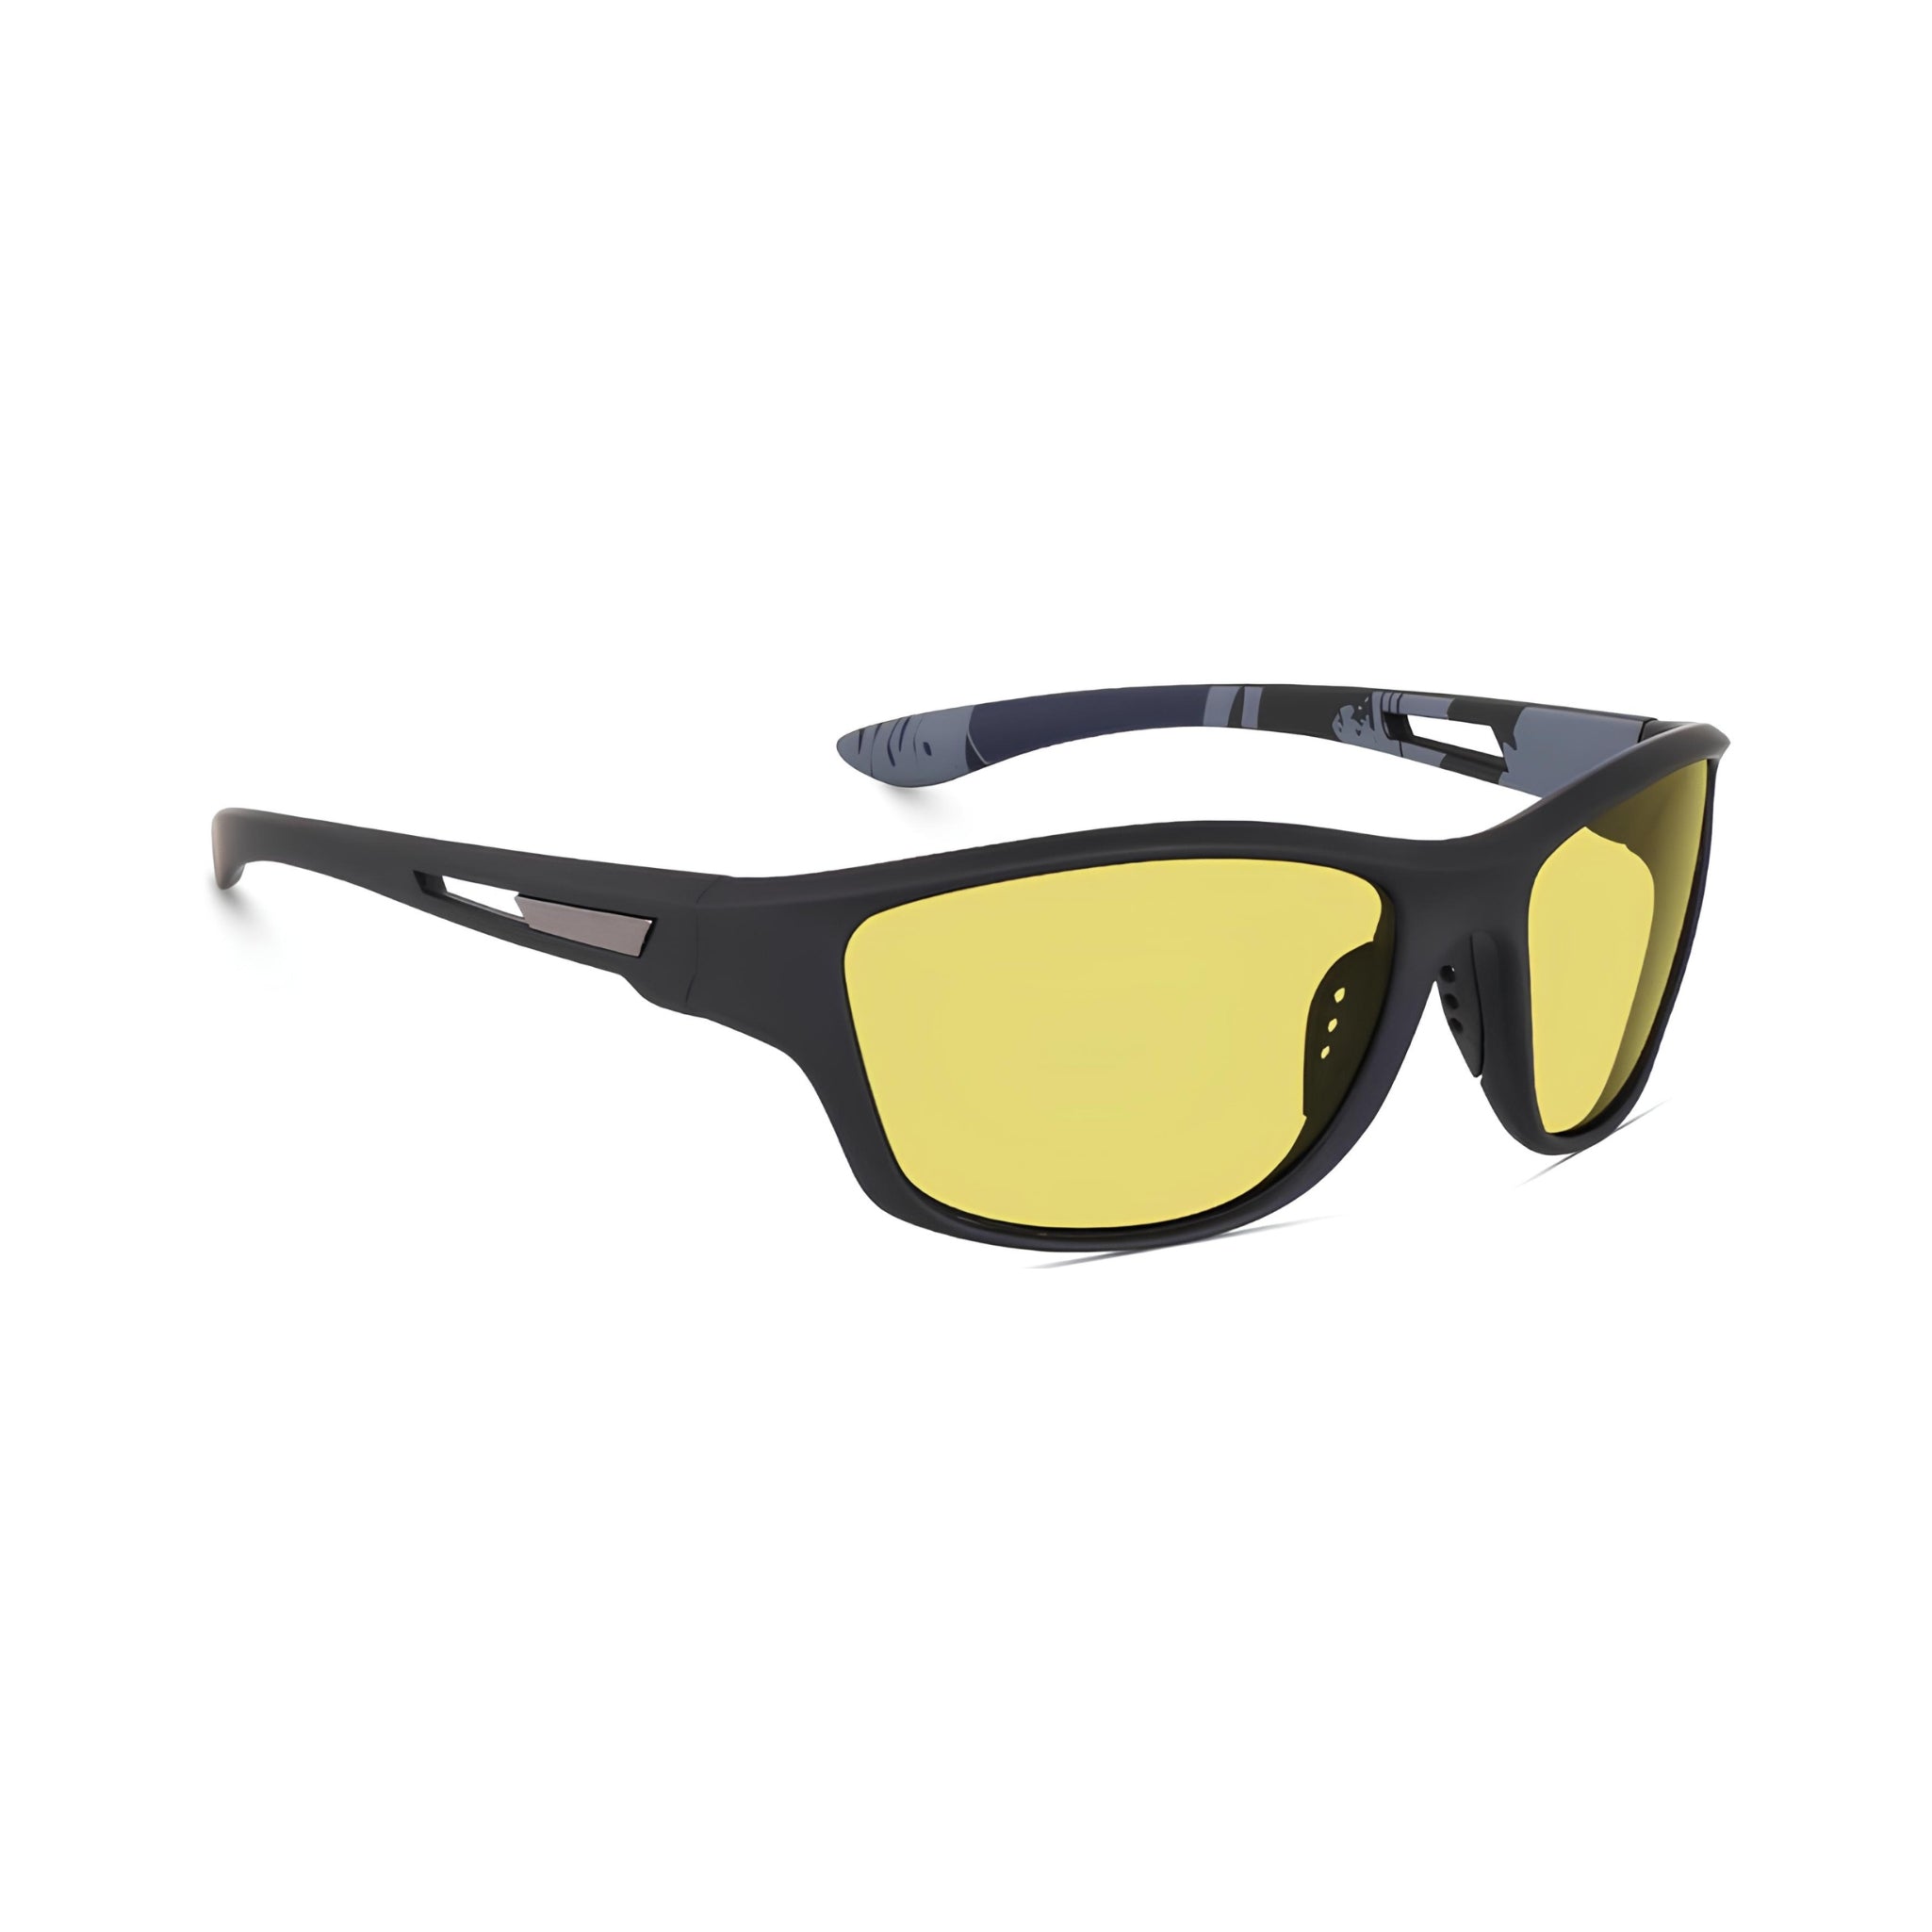 Xplorer Series Polarized Sports Sunglasses - Yellow - Best For Night Driving